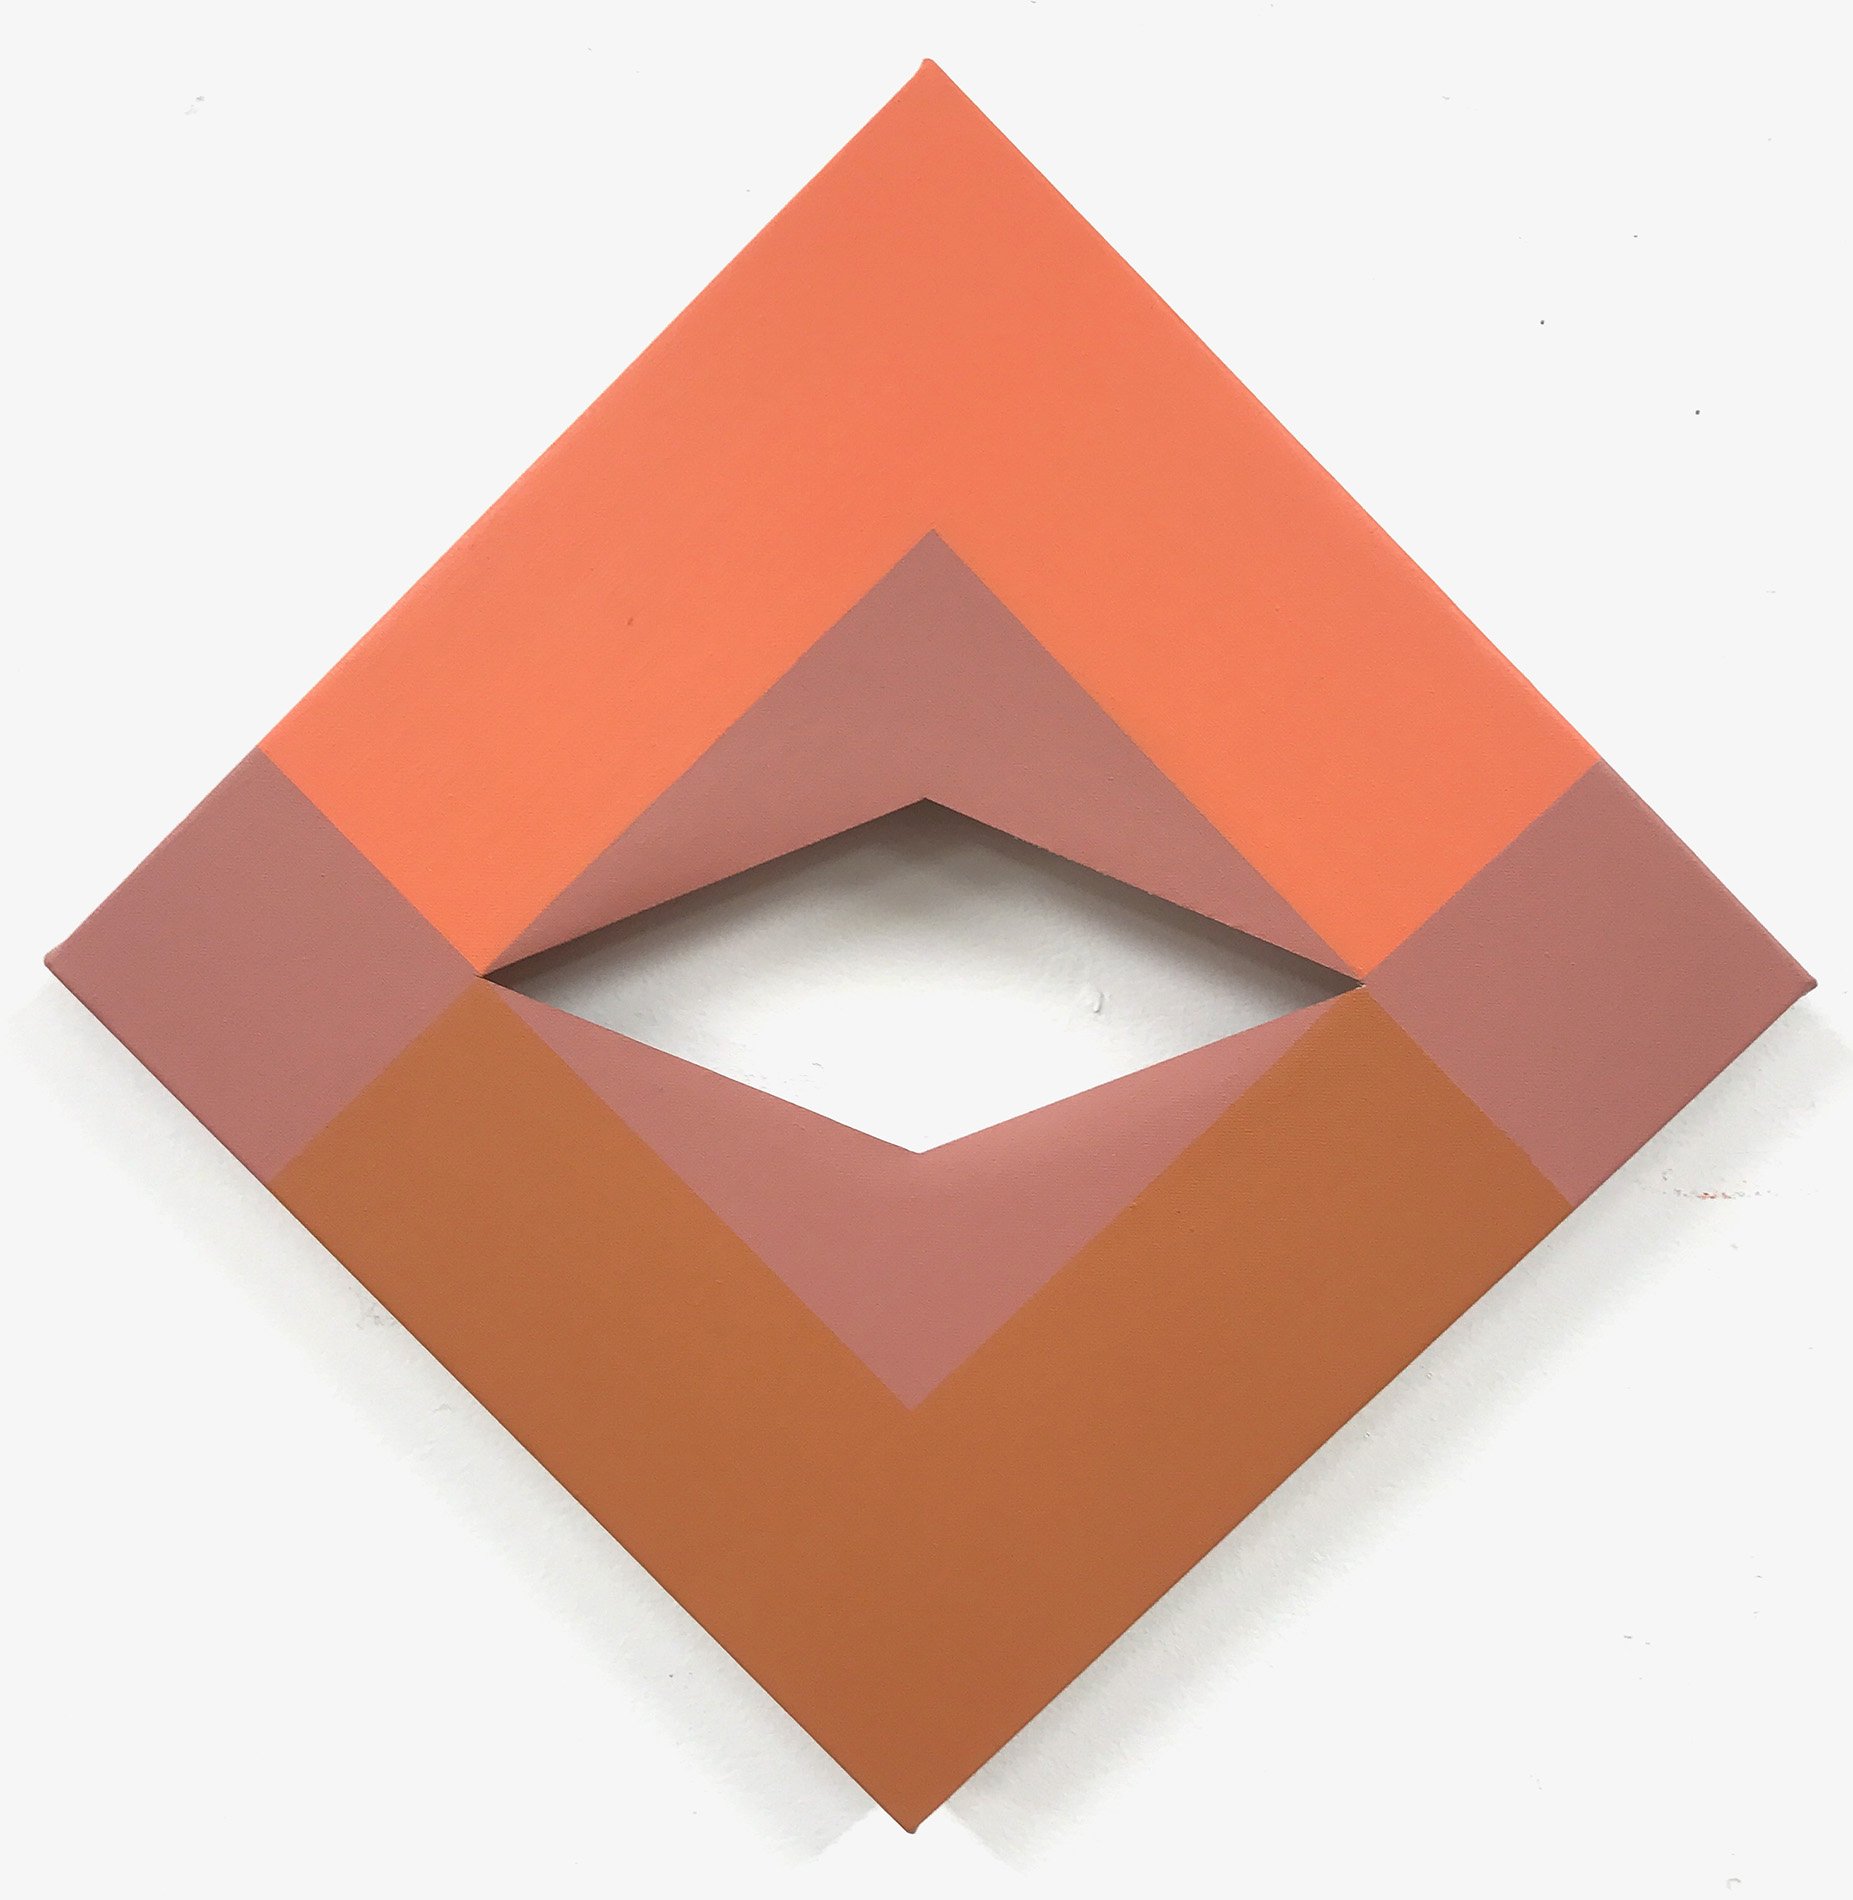   Meridian/Equivalence 99 , acrylic on cut linen, 17” x 17”, 2020 